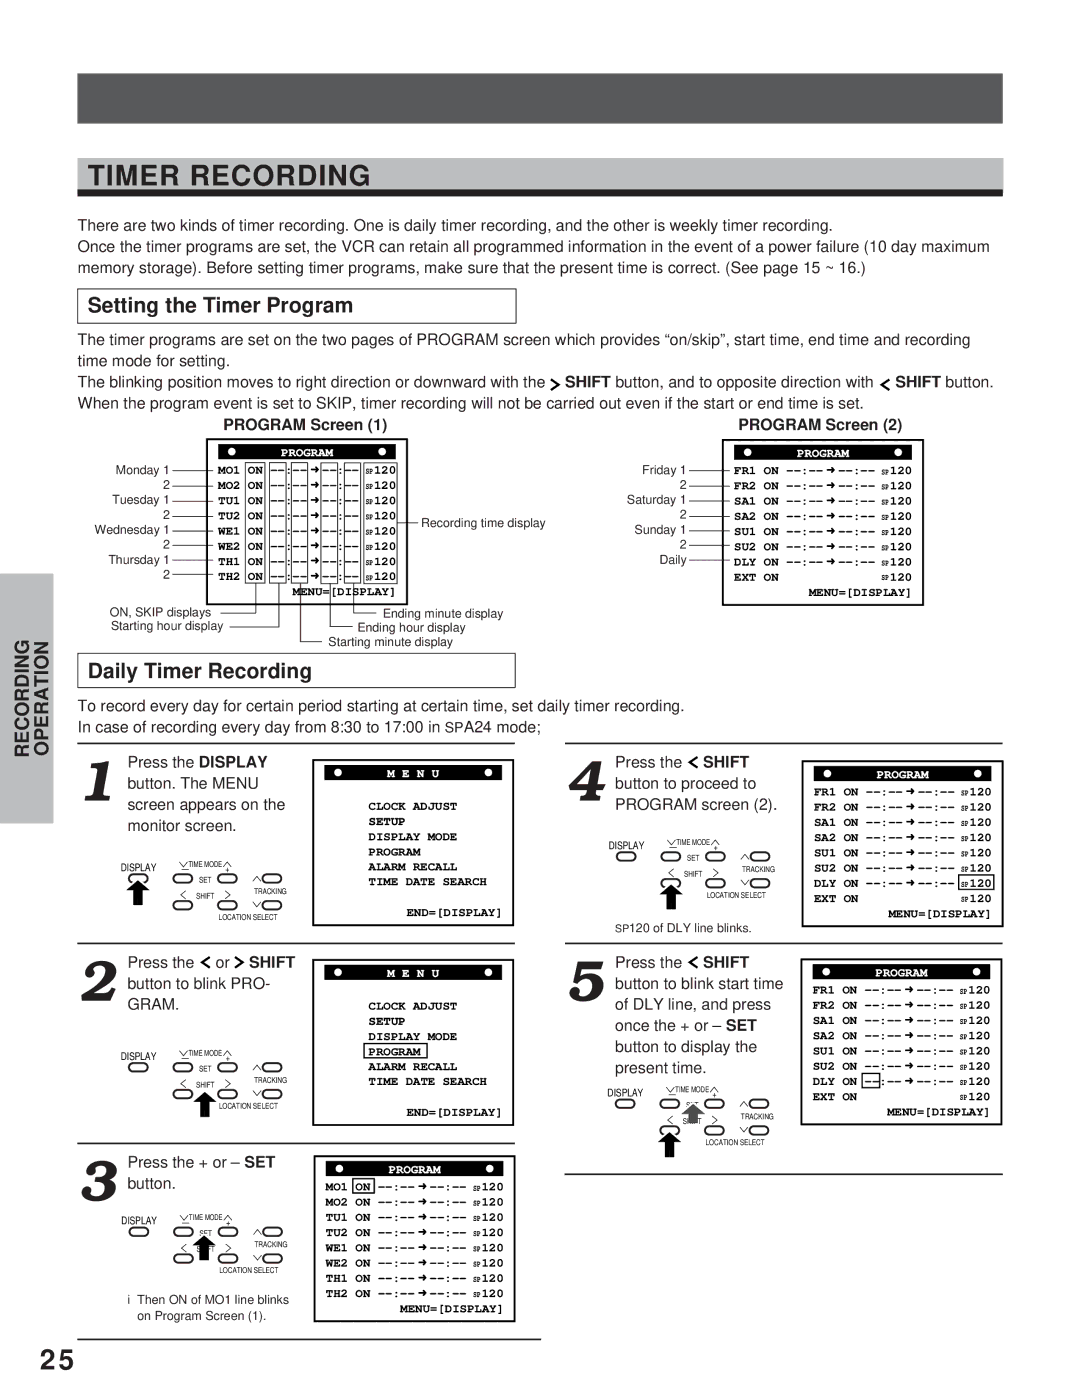 Toshiba kV-9168A instruction manual Setting the Timer Program, Daily Timer Recording, Program Screen 